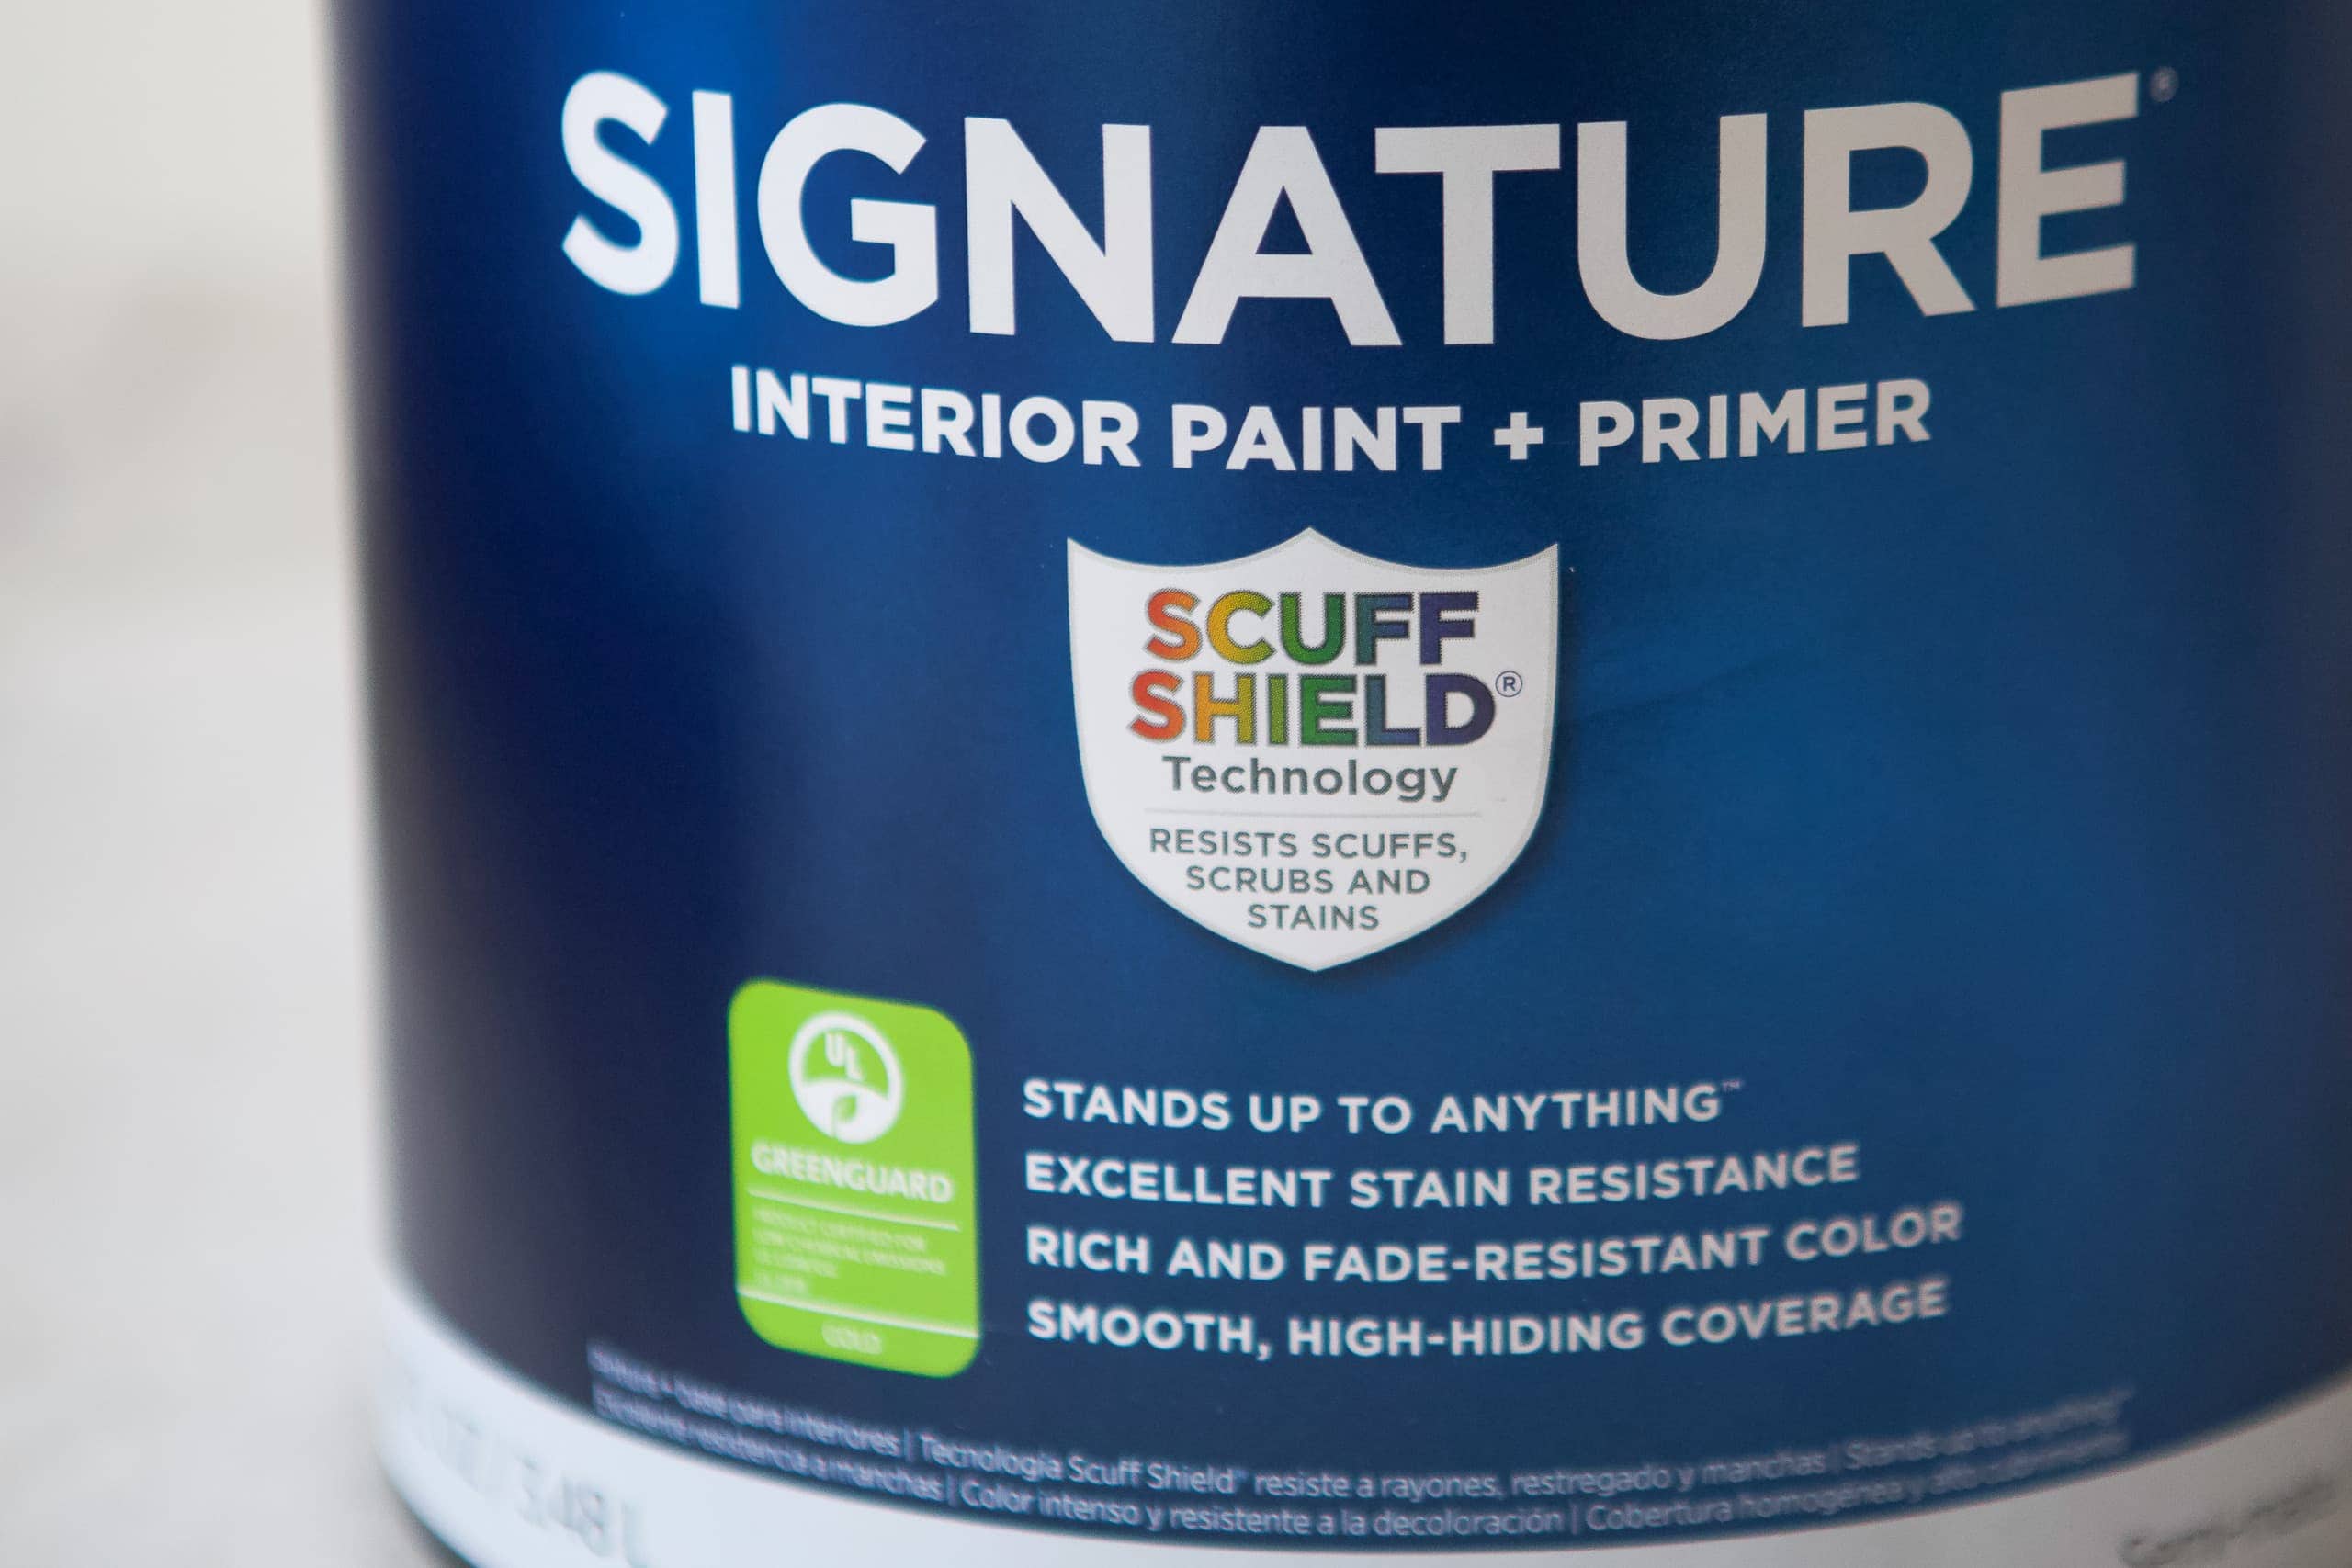 Choosing Valspar signature paint